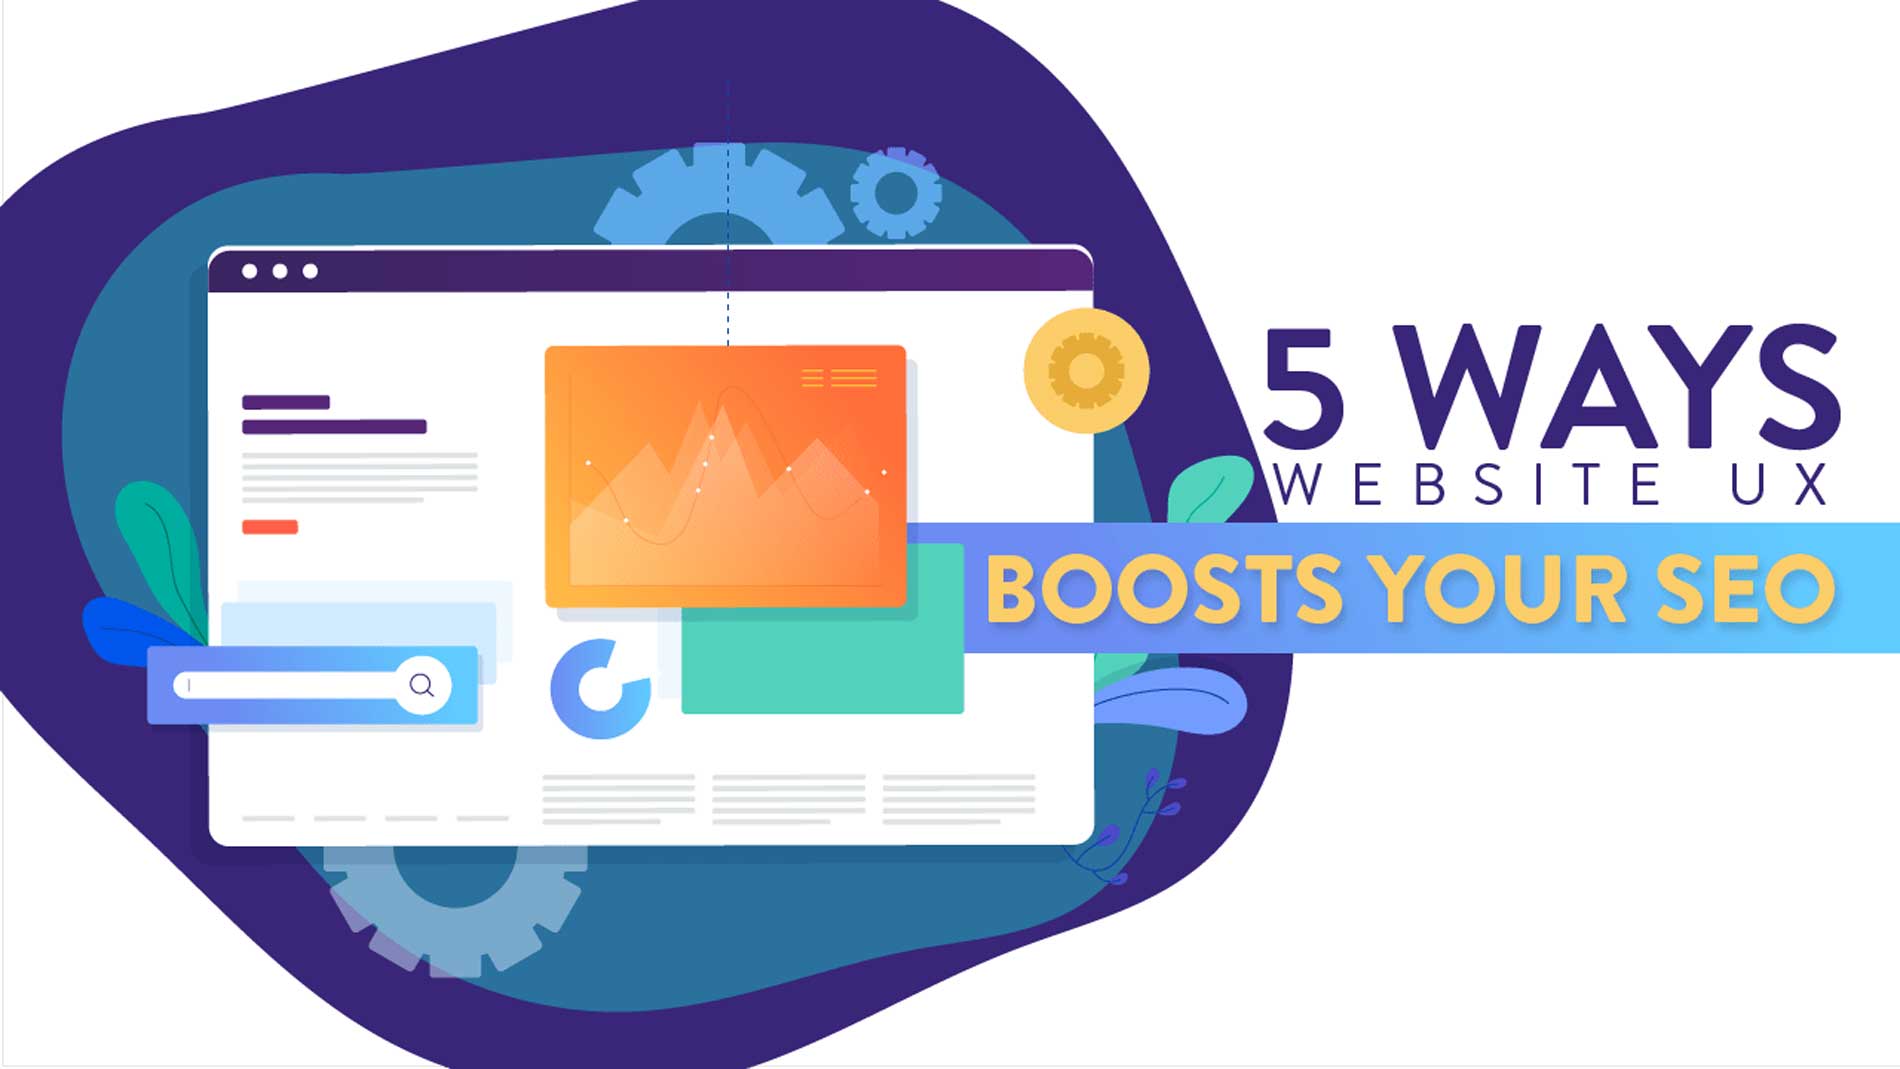 5 ways website ux boots your seo